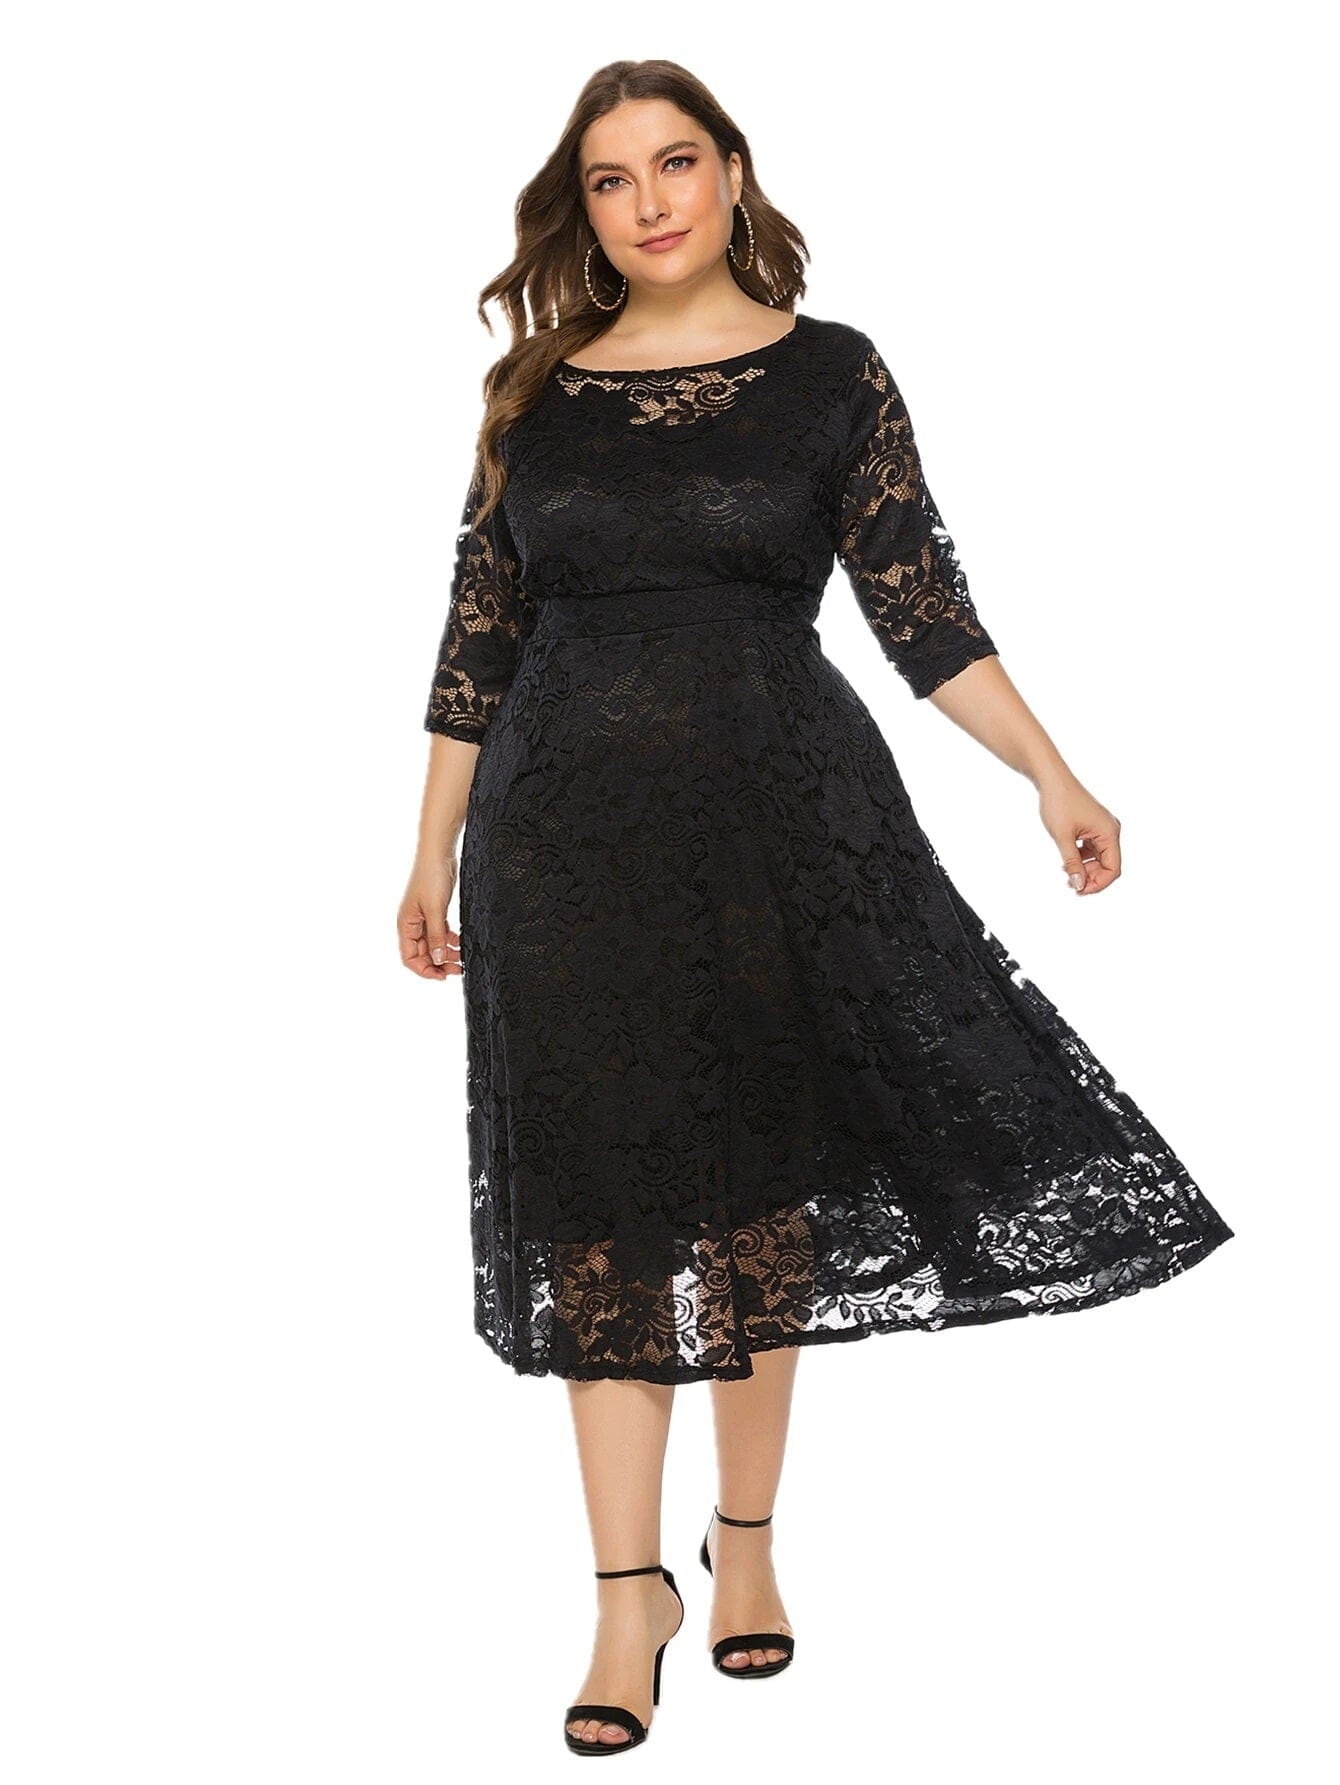 Women Plus Size Vintage Lace Swing Party Cocktail Wedding Midi Dress with pocket Dresses jehouze Black XL 